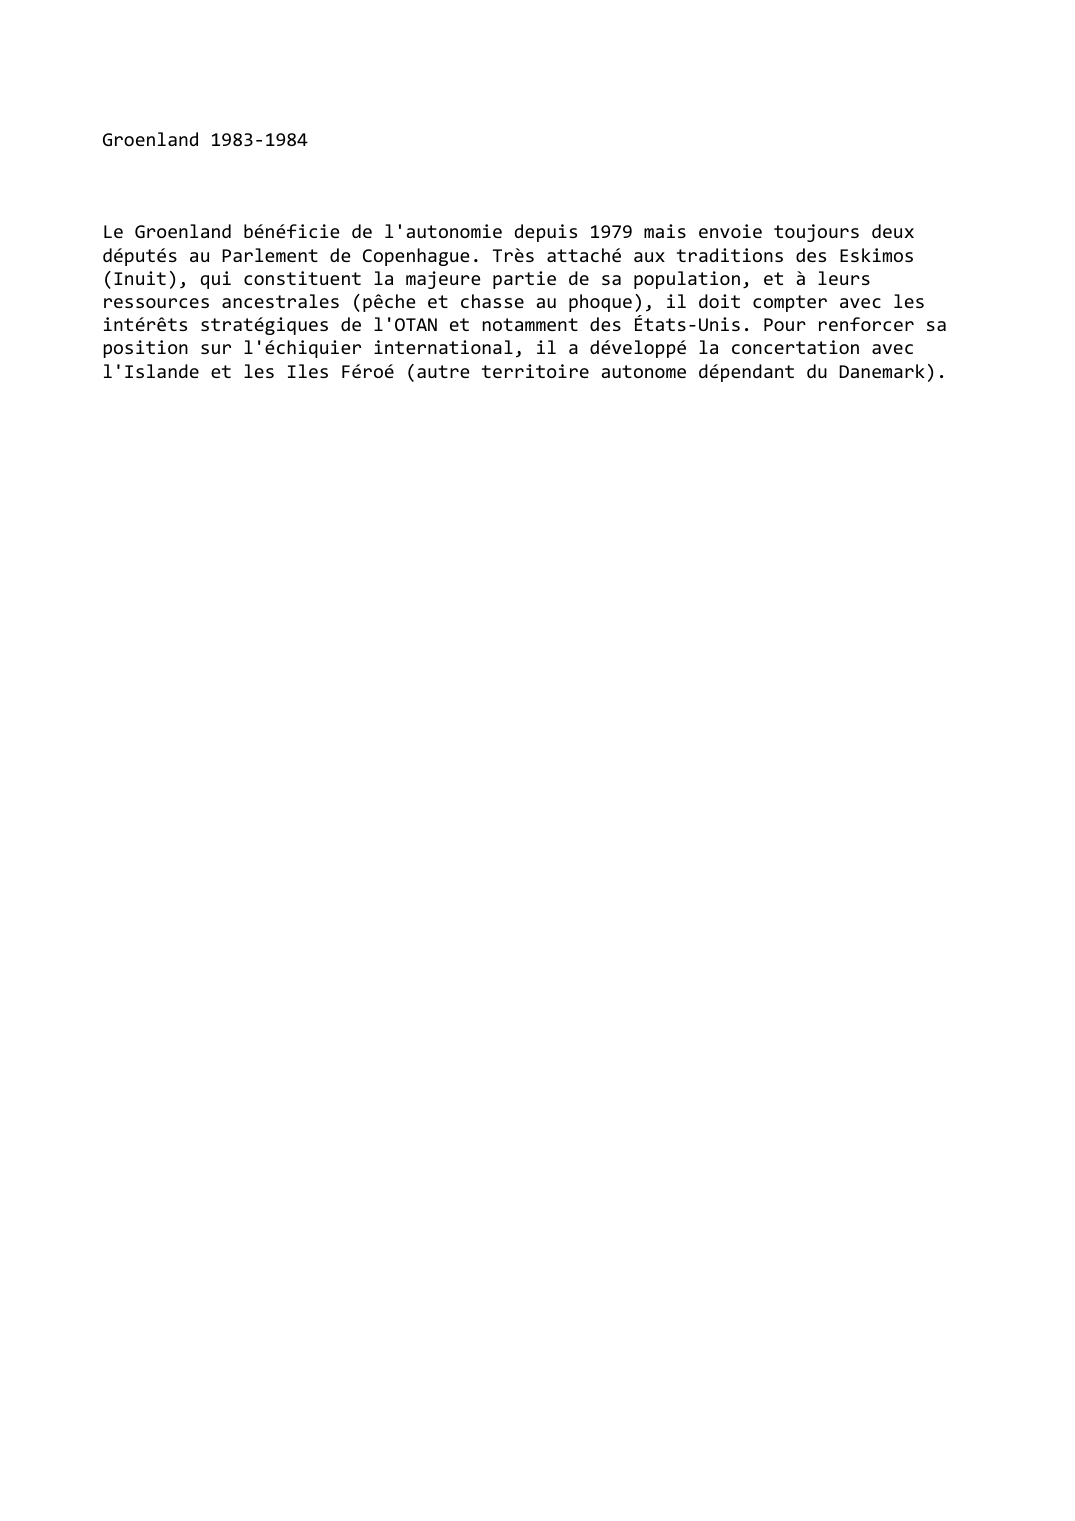 Prévisualisation du document Groenland (1983-1984)